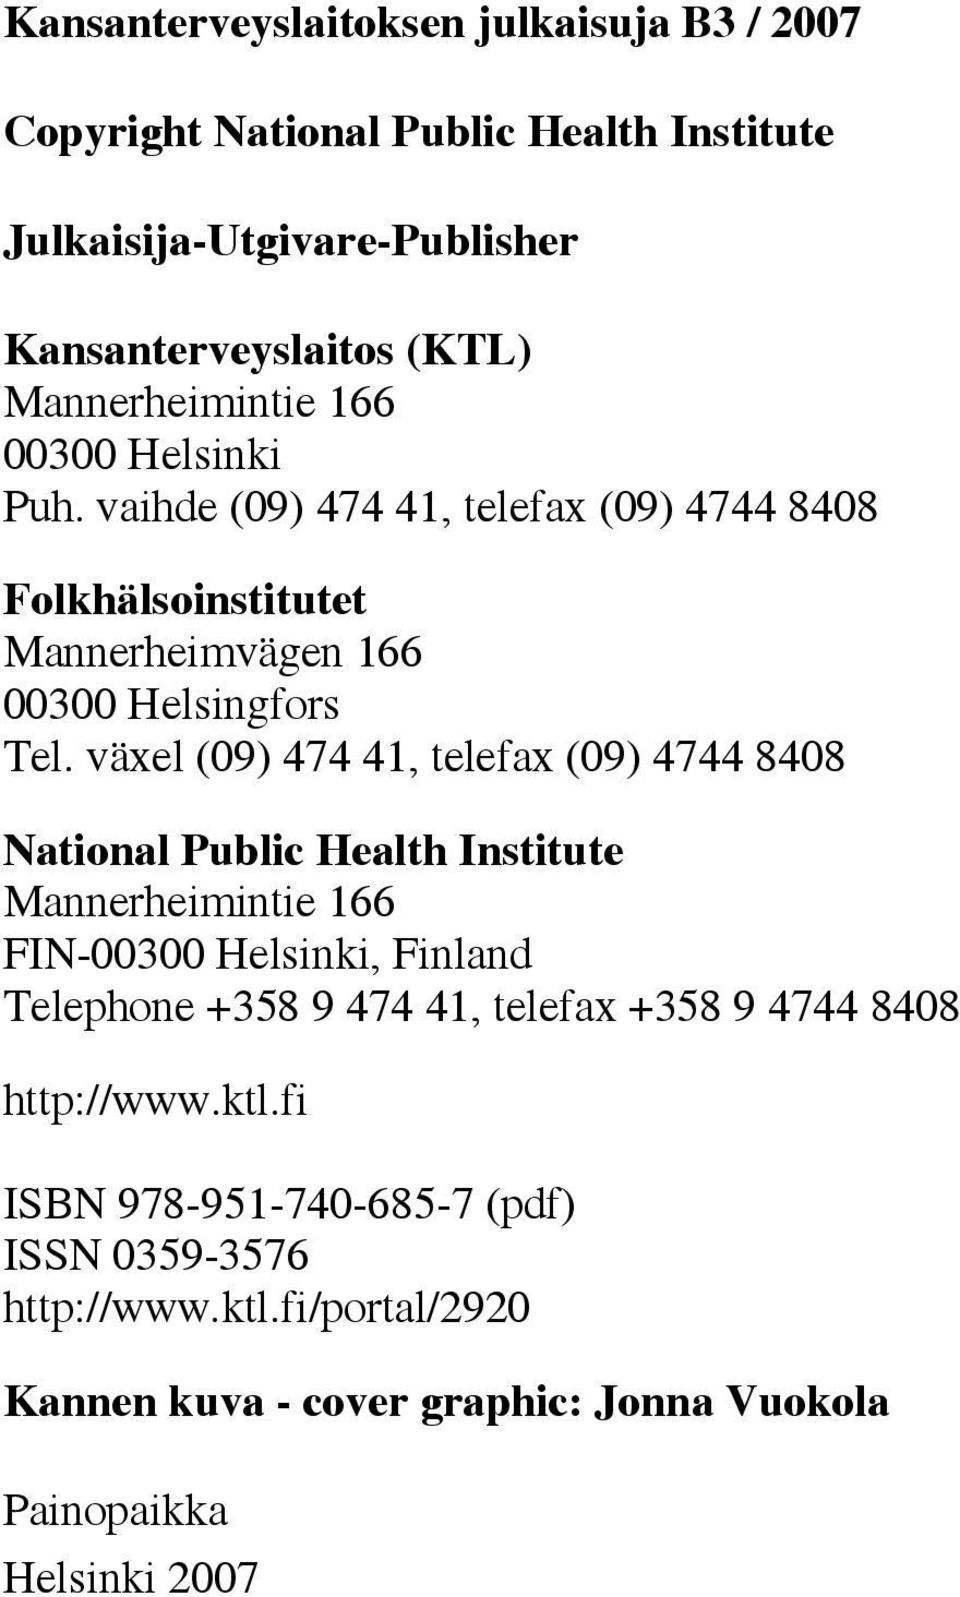 växel (09) 474 41, telefax (09) 4744 8408 National Public Health Institute Mannerheimintie 166 FIN-00300 Helsinki, Finland Telephone +358 9 474 41, telefax